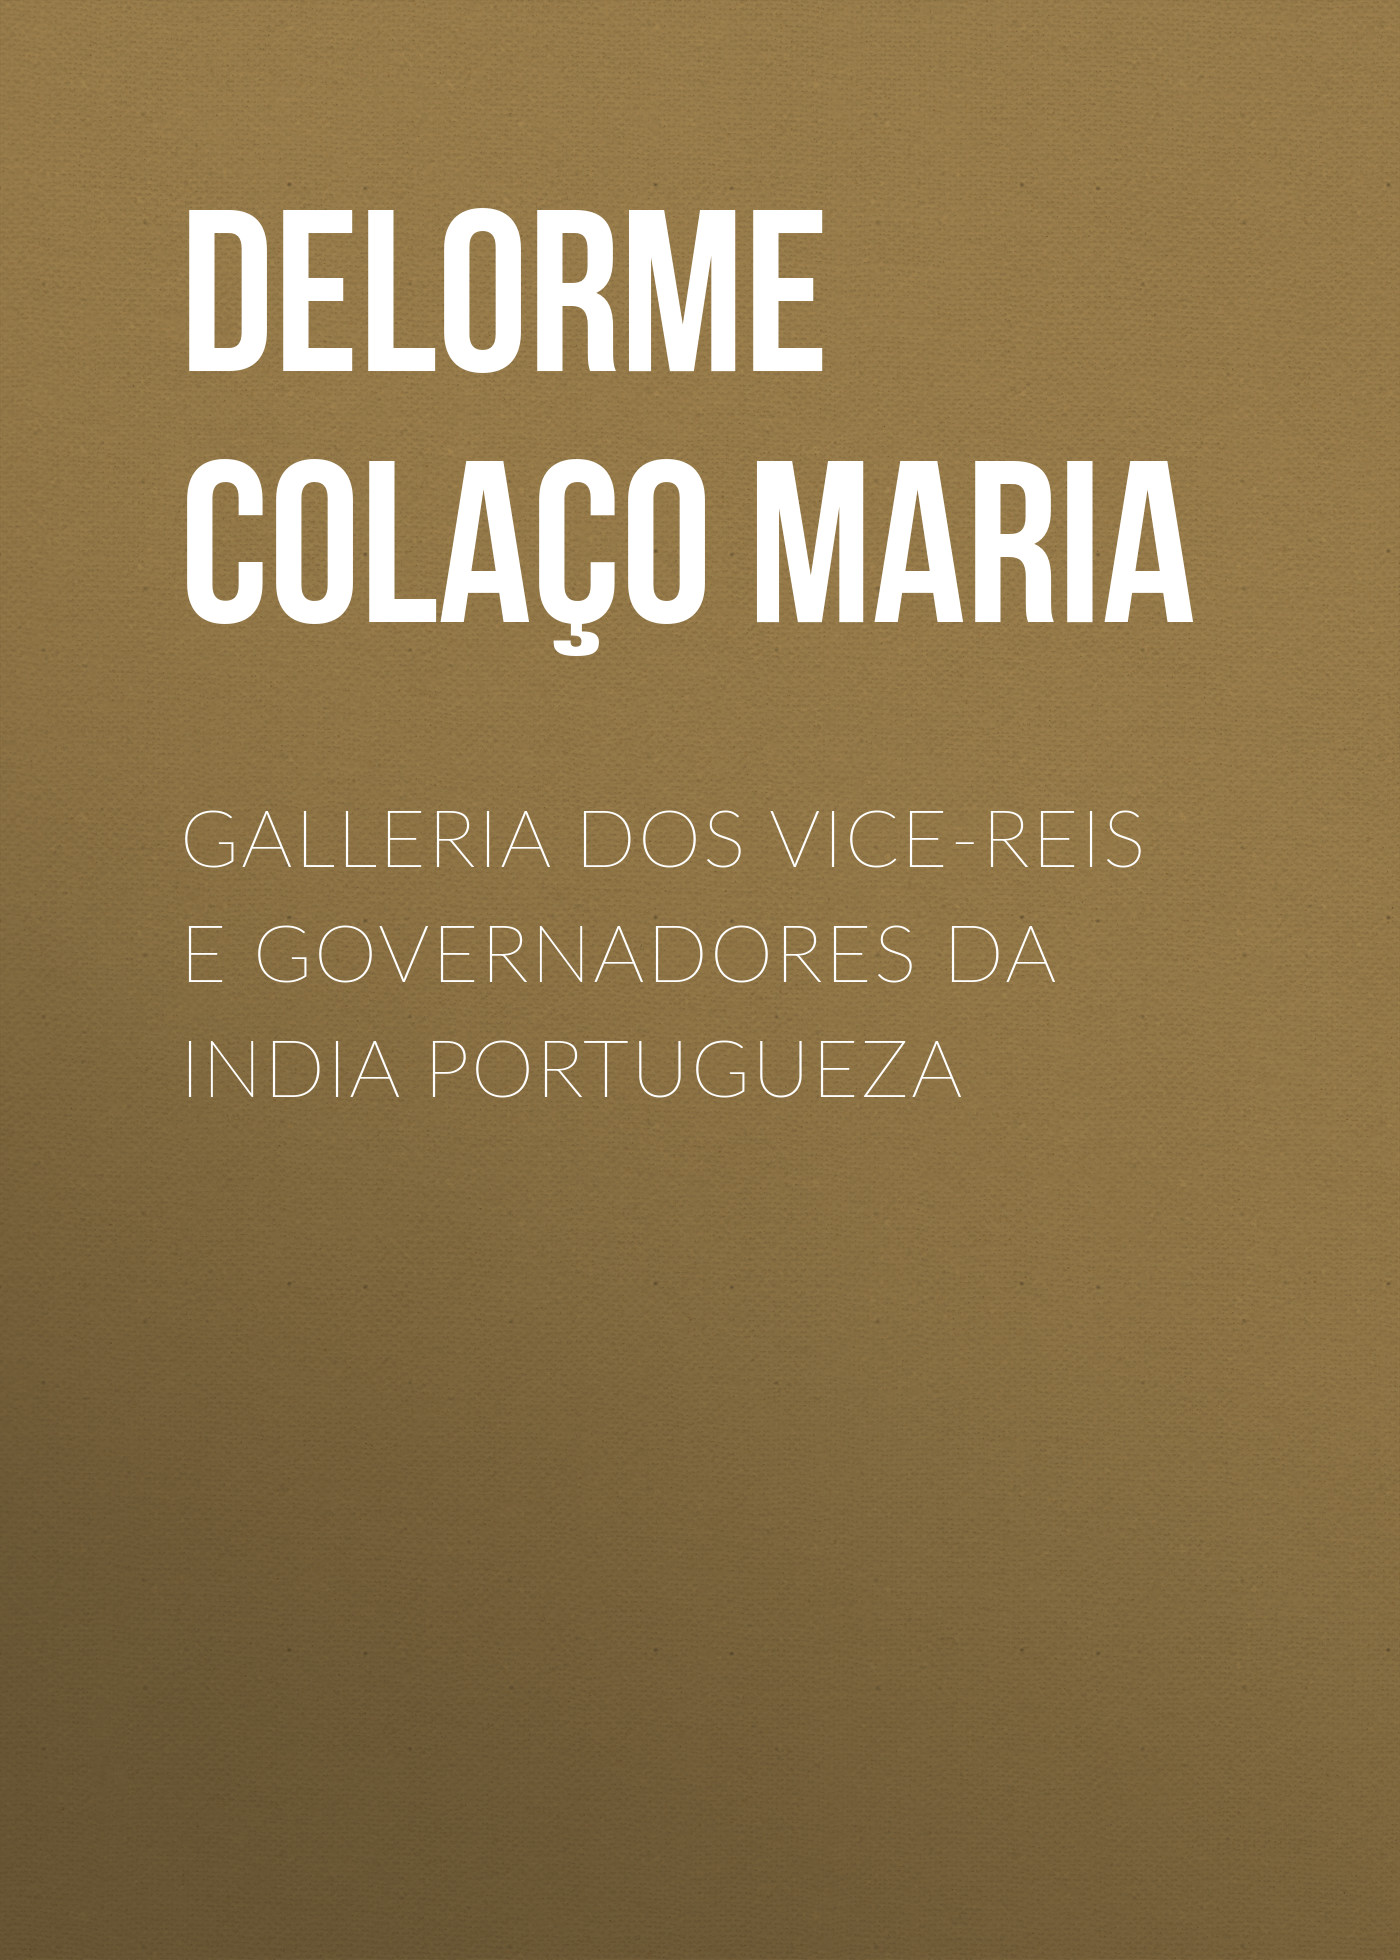 Delorme Colaço José Maria Galleria dos Vice-reis e Governadores da India Portugueza